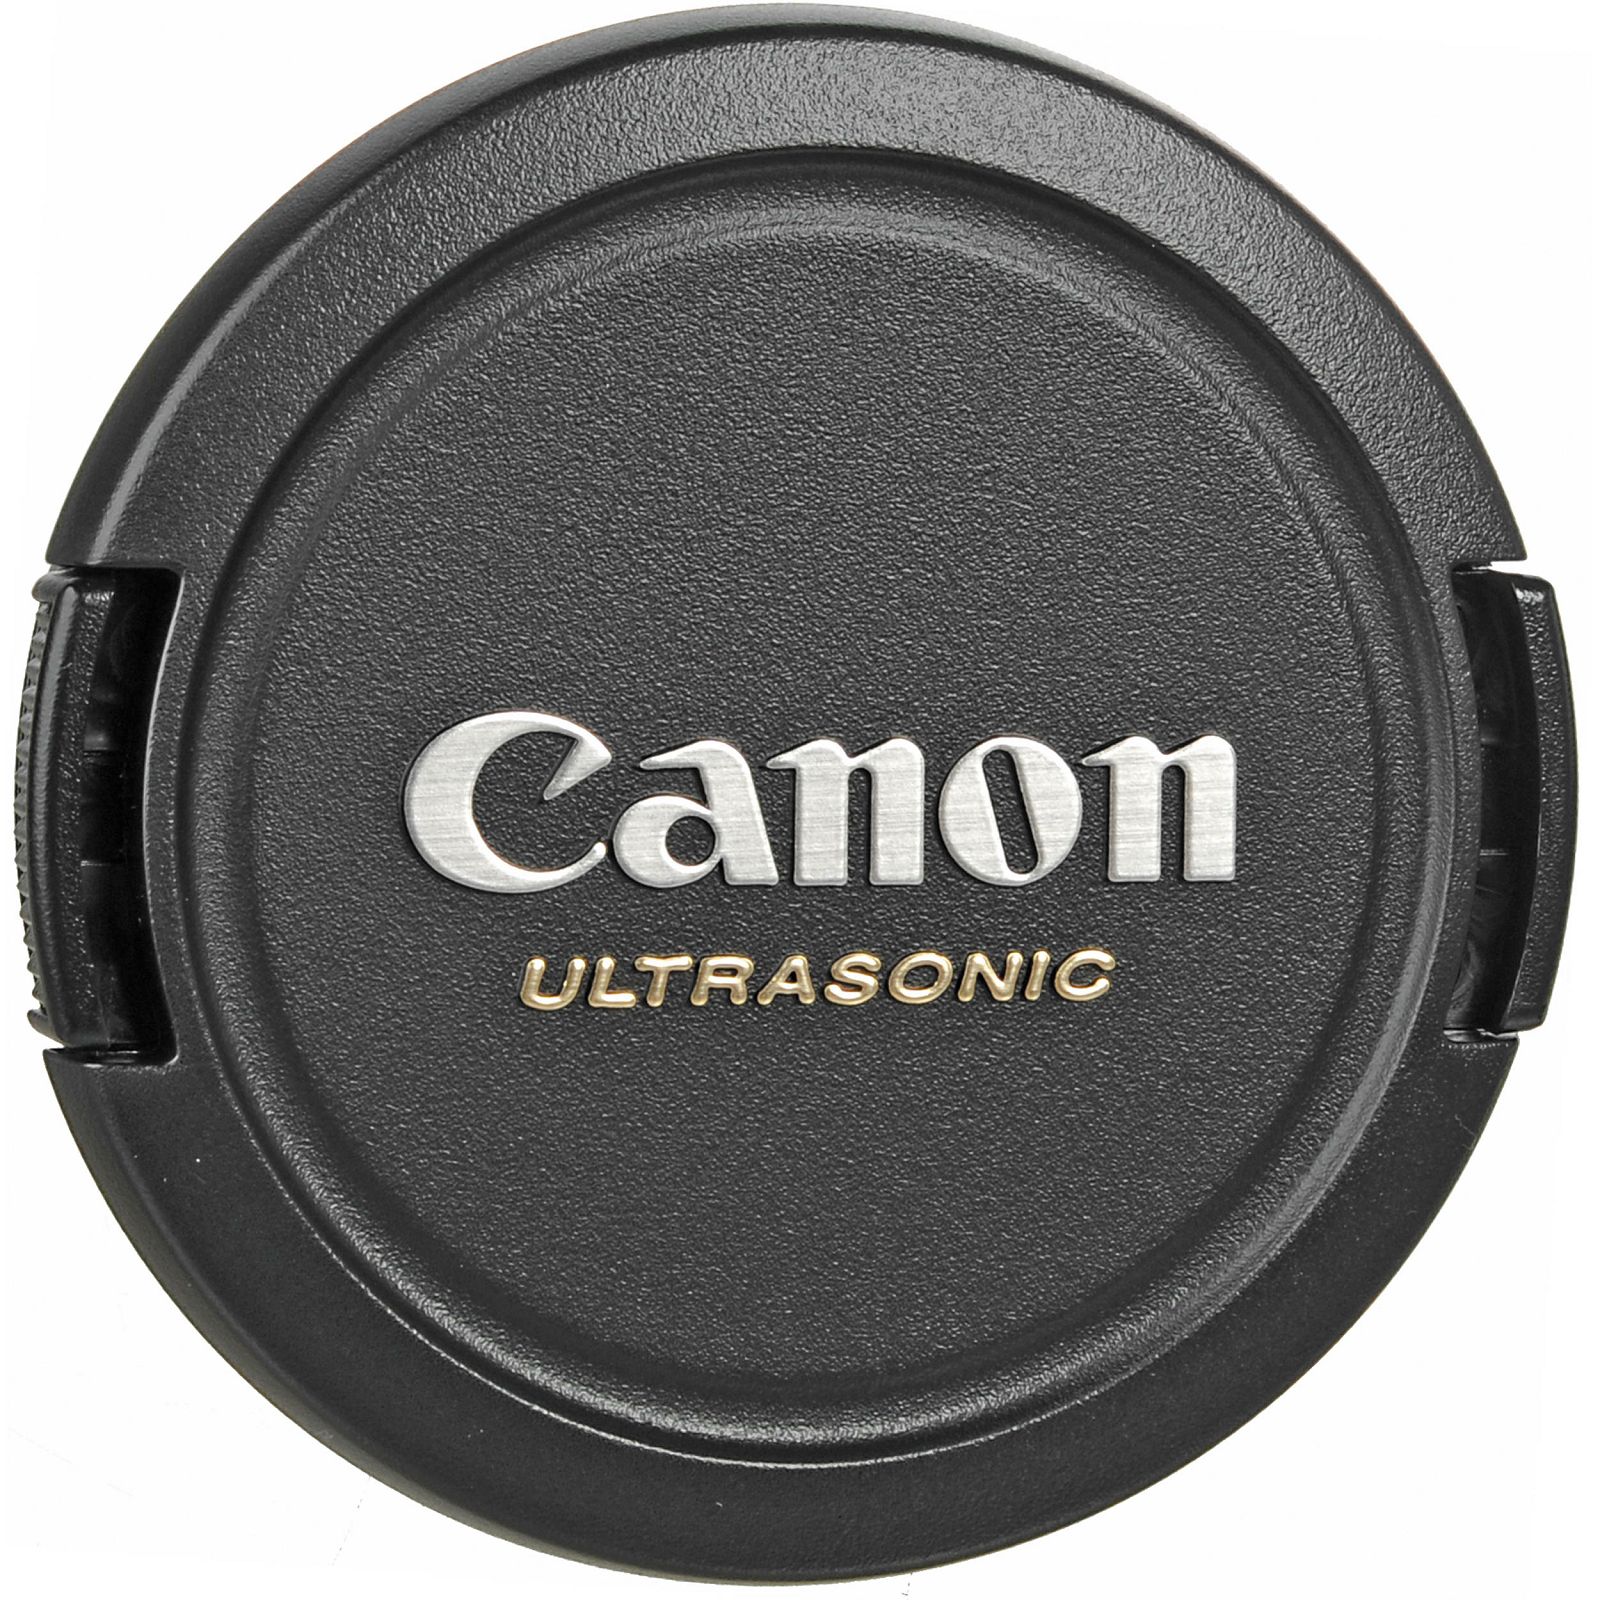 Canon EF 100mm f/2.8 USM Macro telefoto objektiv prime lens 100 2.8 1:2,8 (4657A011AA)